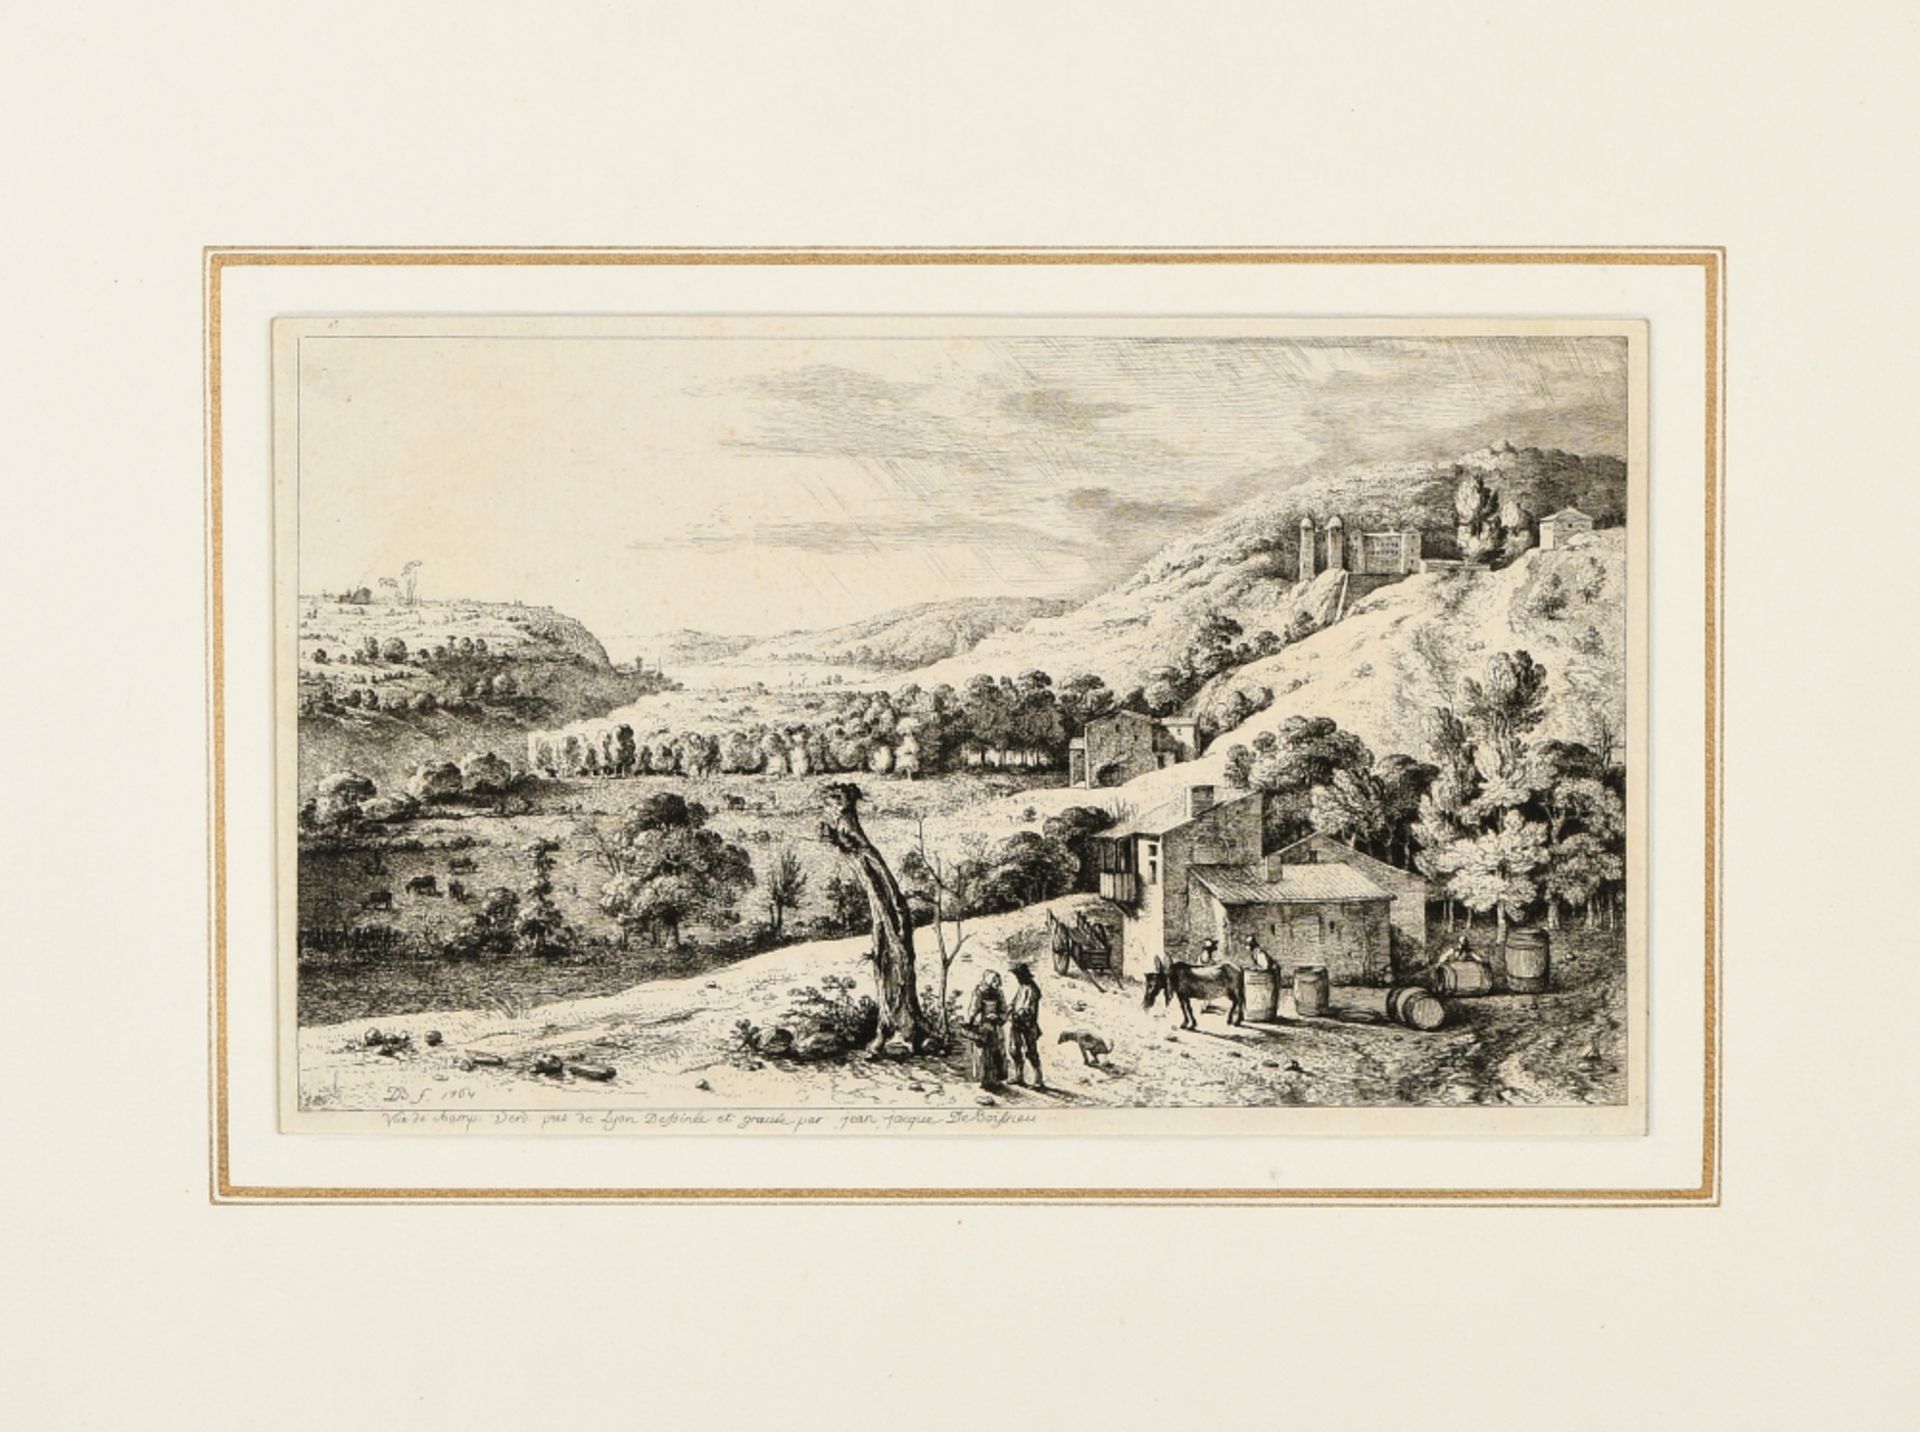 Boissieu, Jean Jacques de, 1736 - 1810 Lyon